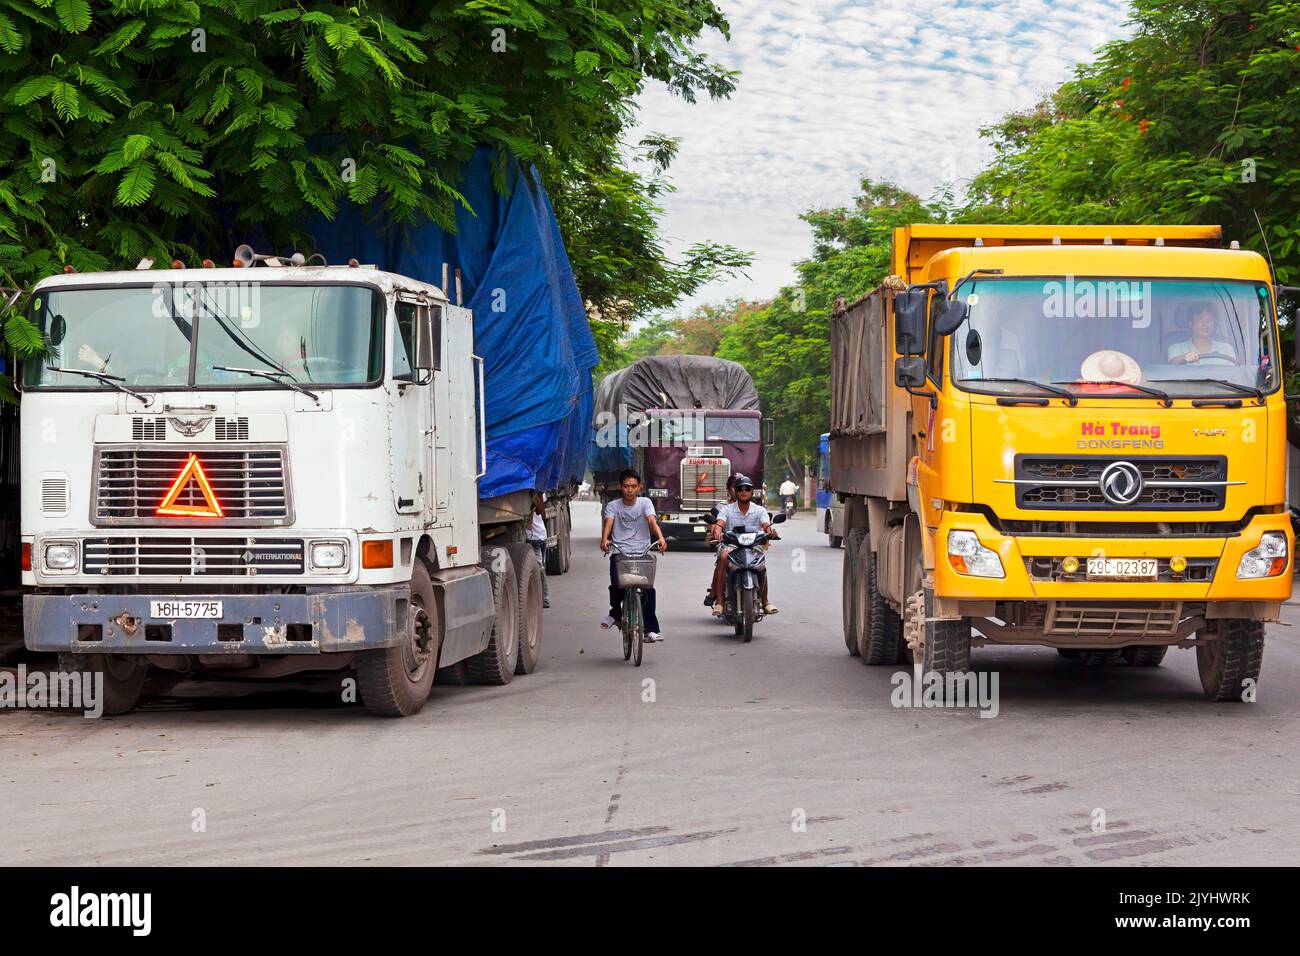 Container trucks and motorbikes in traffic, Hai Phong, Vietnam Stock Photo